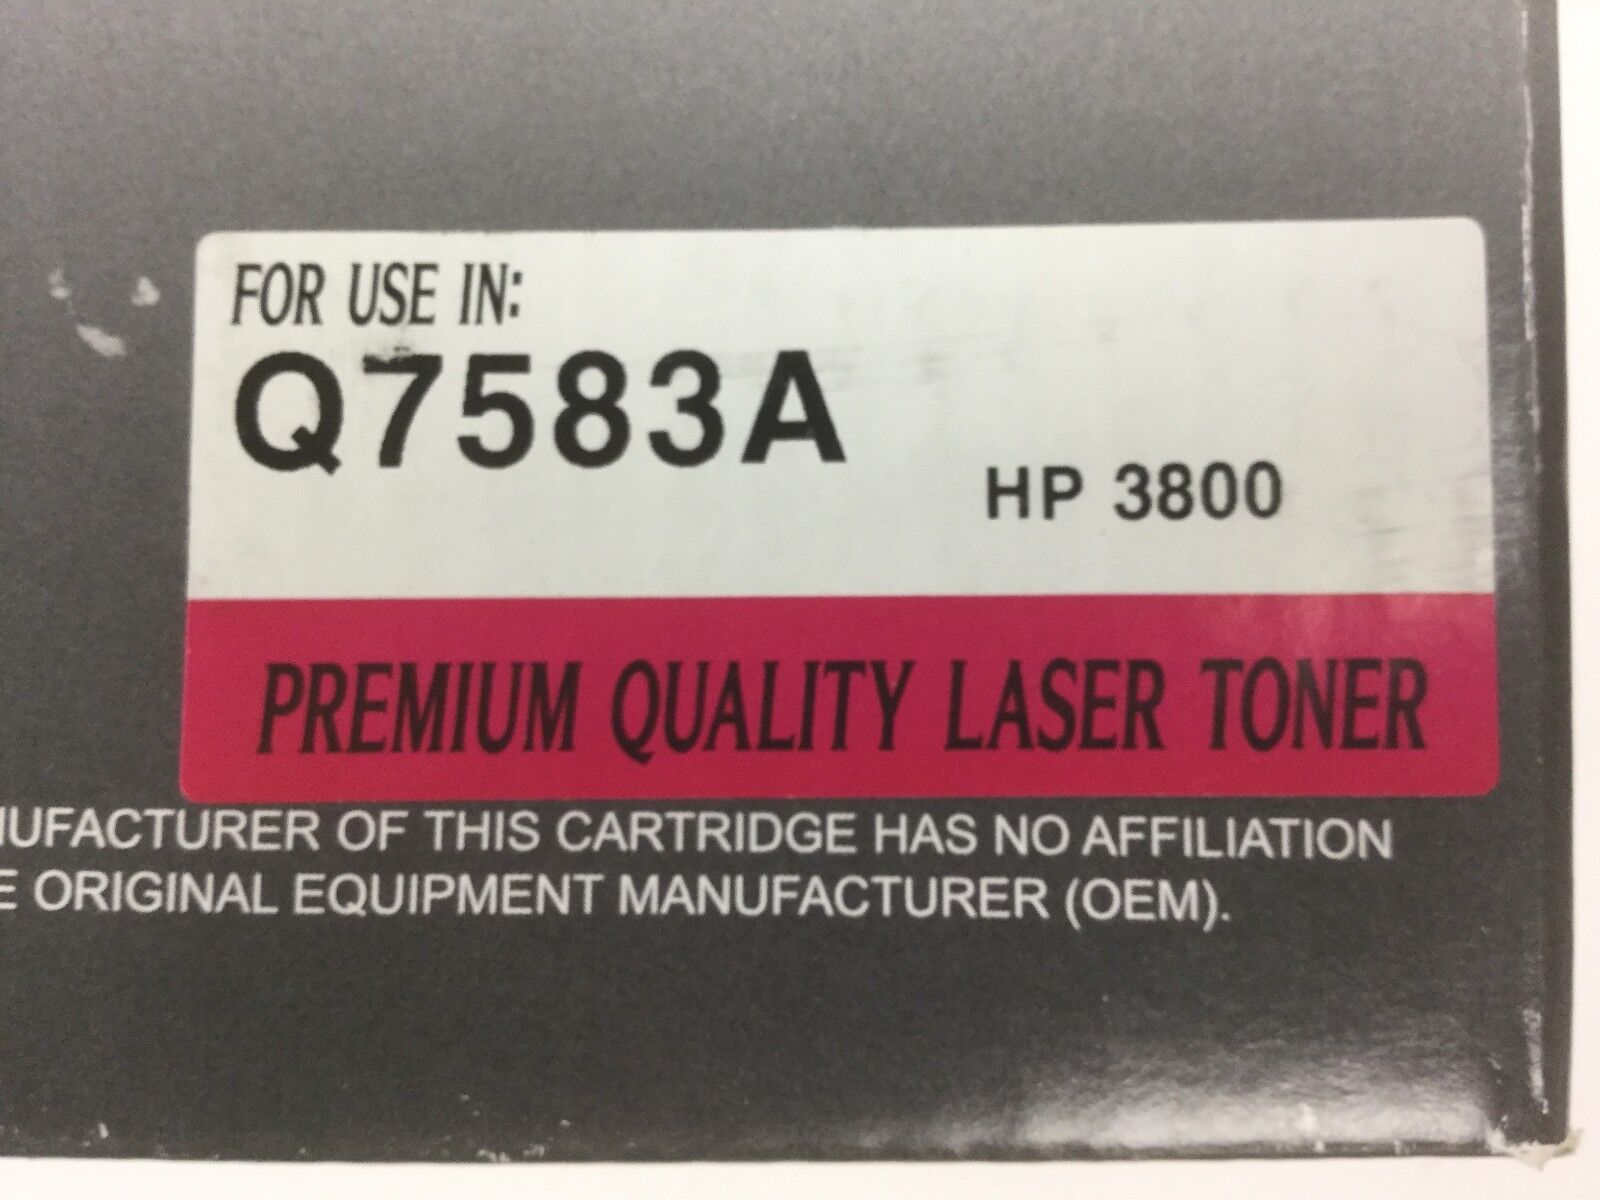 IMAGING CARTRIDGE, Magenta Toner Cartridge Compatible for HP Q6473A,HP 3800, NEW